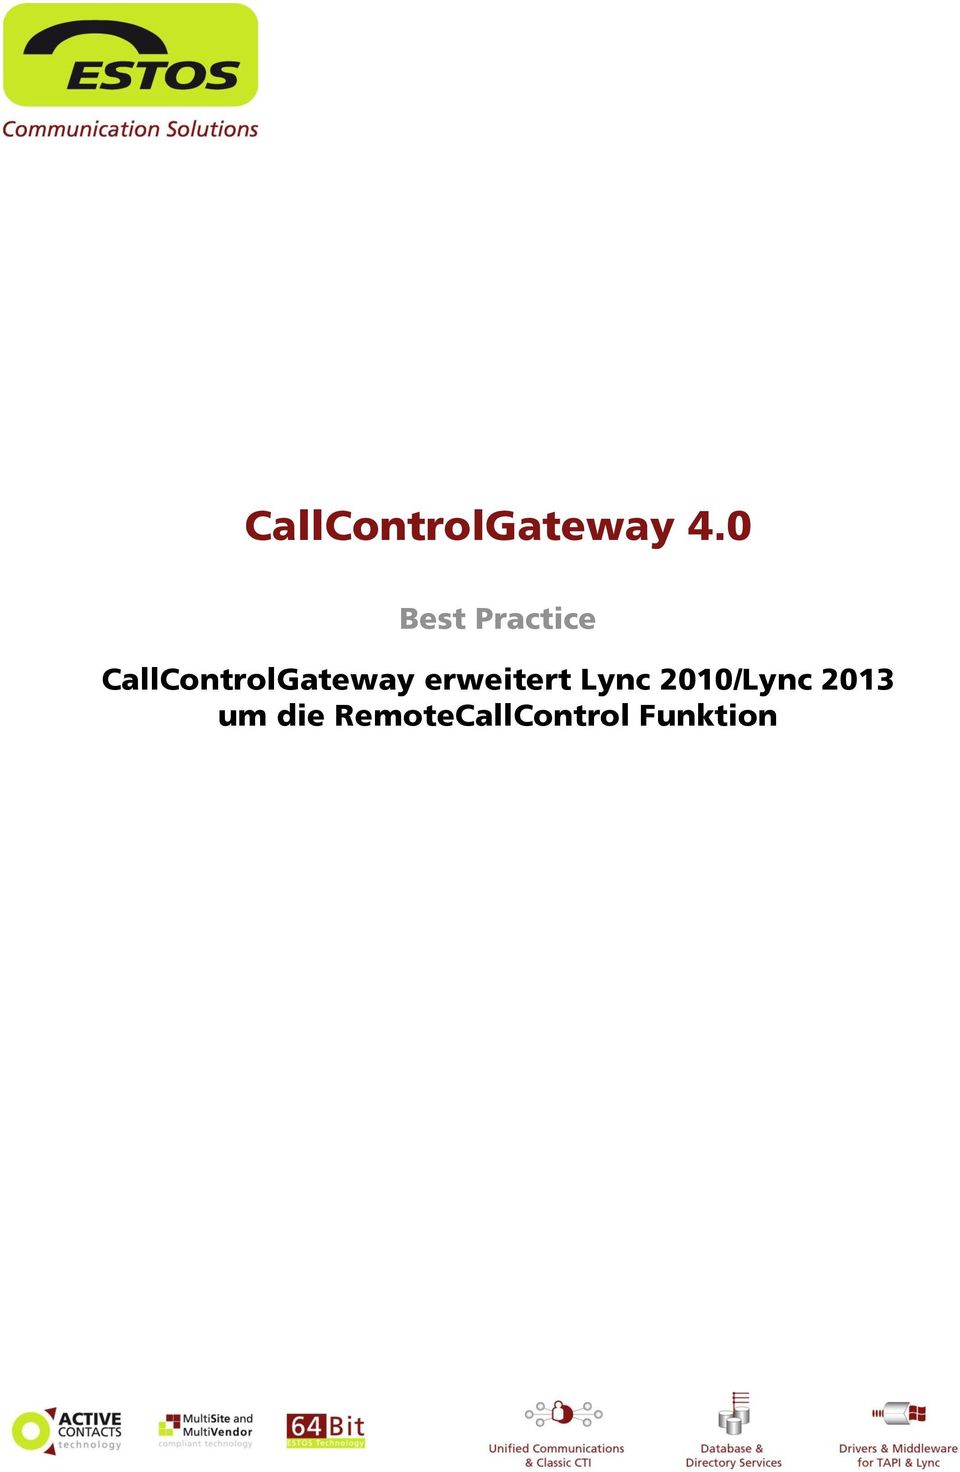 CallControlGateway erweitert